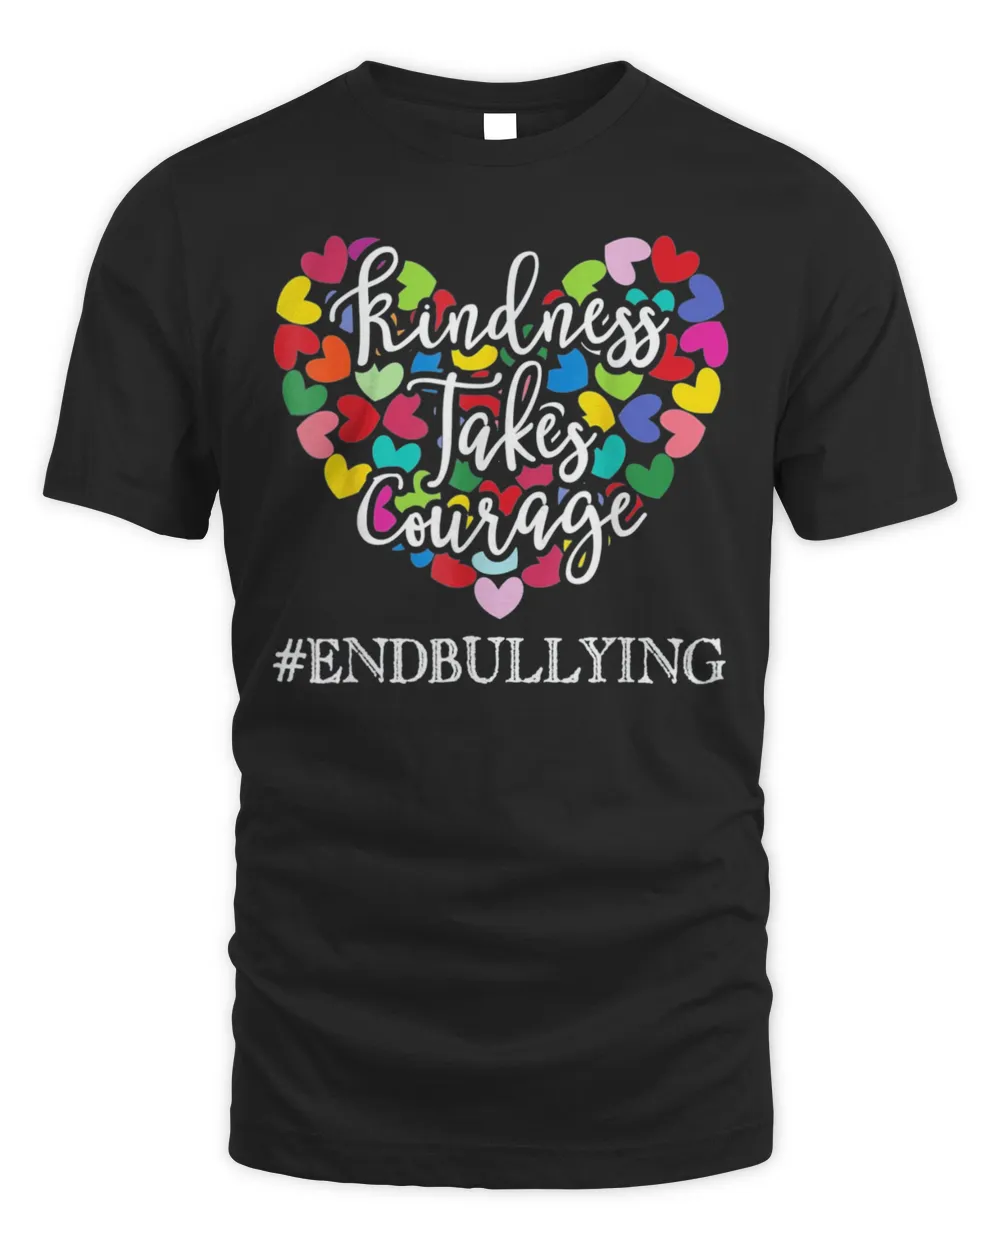 Orange Unity Day Anti-bullying Spreed Kindness T-Shirt